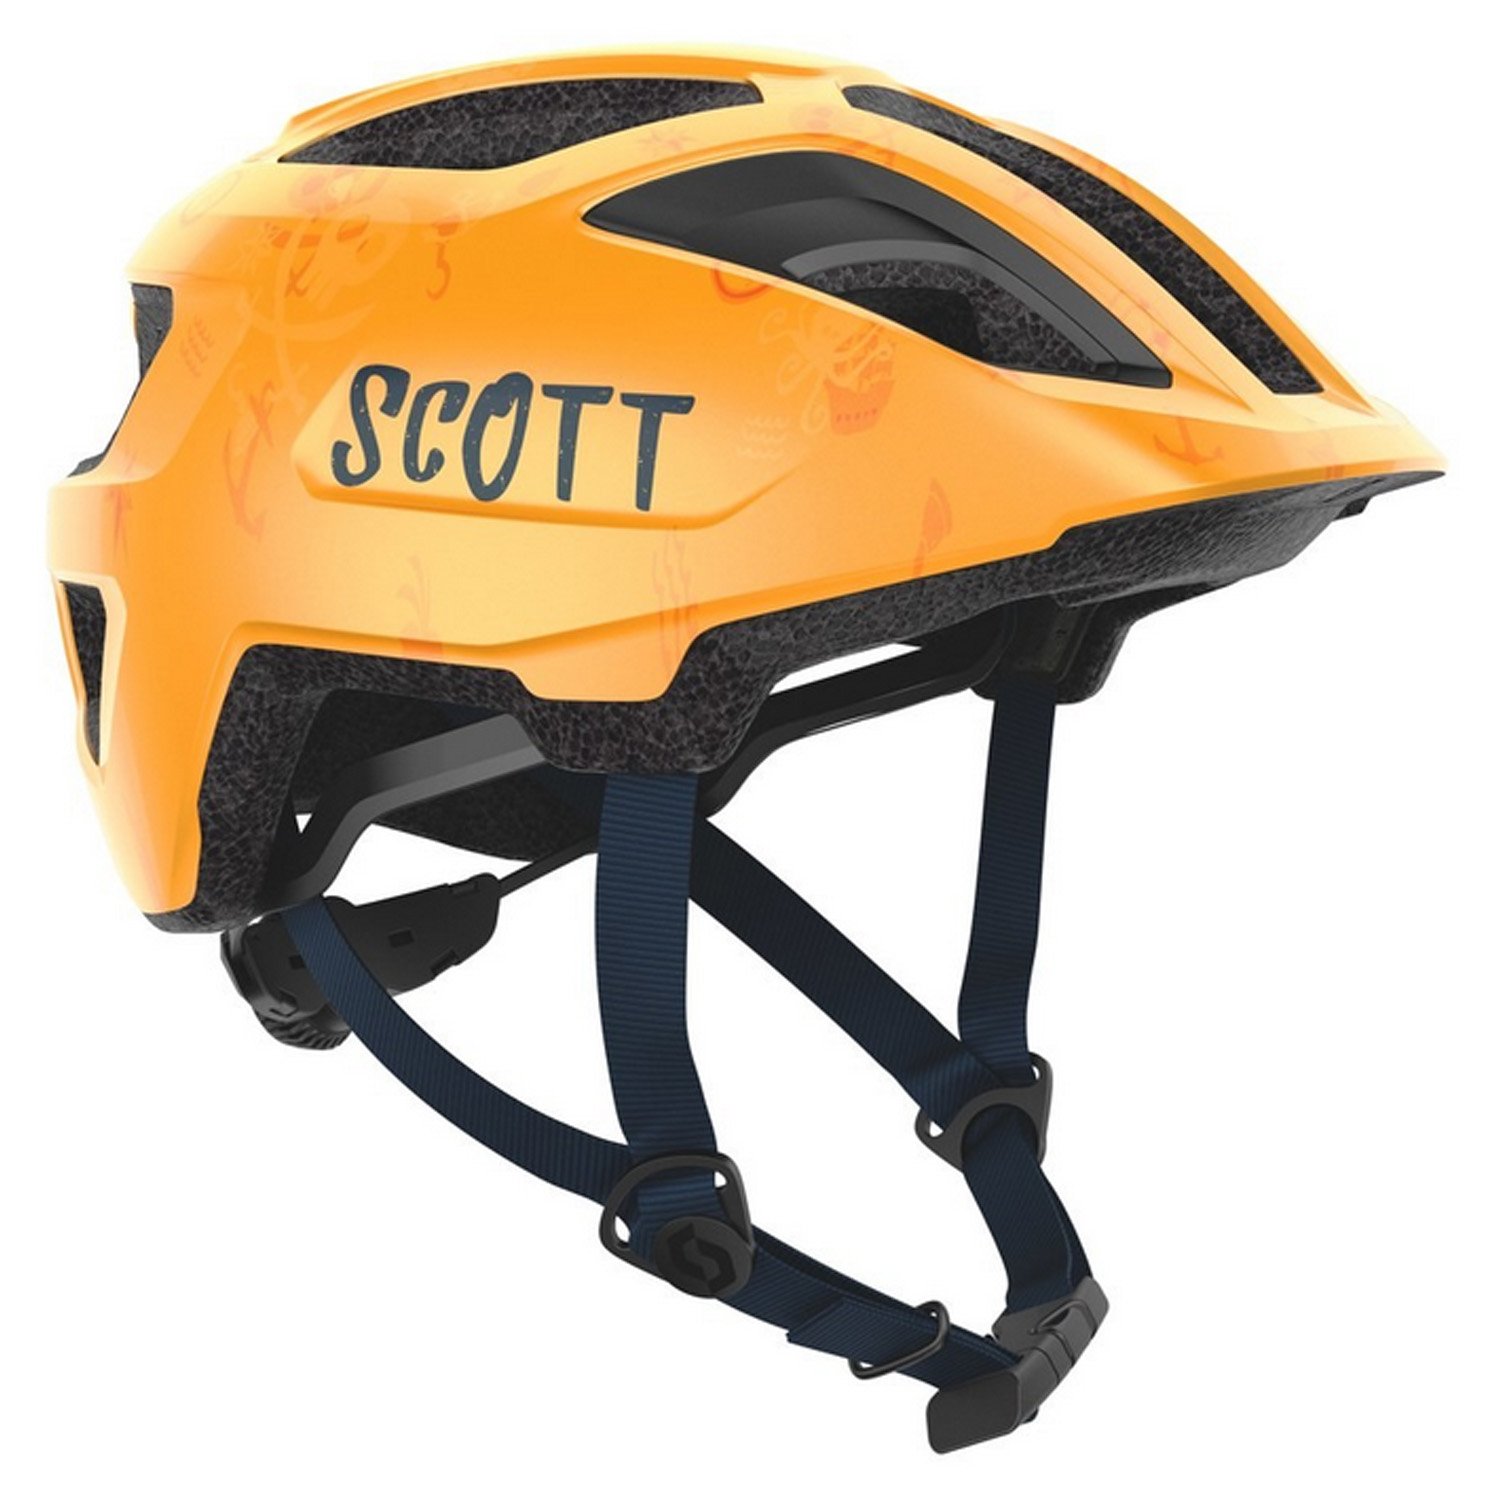 Велошлем SCOTT Kid Spunto (CE), fire orange, ES275235-6522 шлем велосипедный scott spunto kid azalea pink onesize 50 56 см 2019 270115 5815